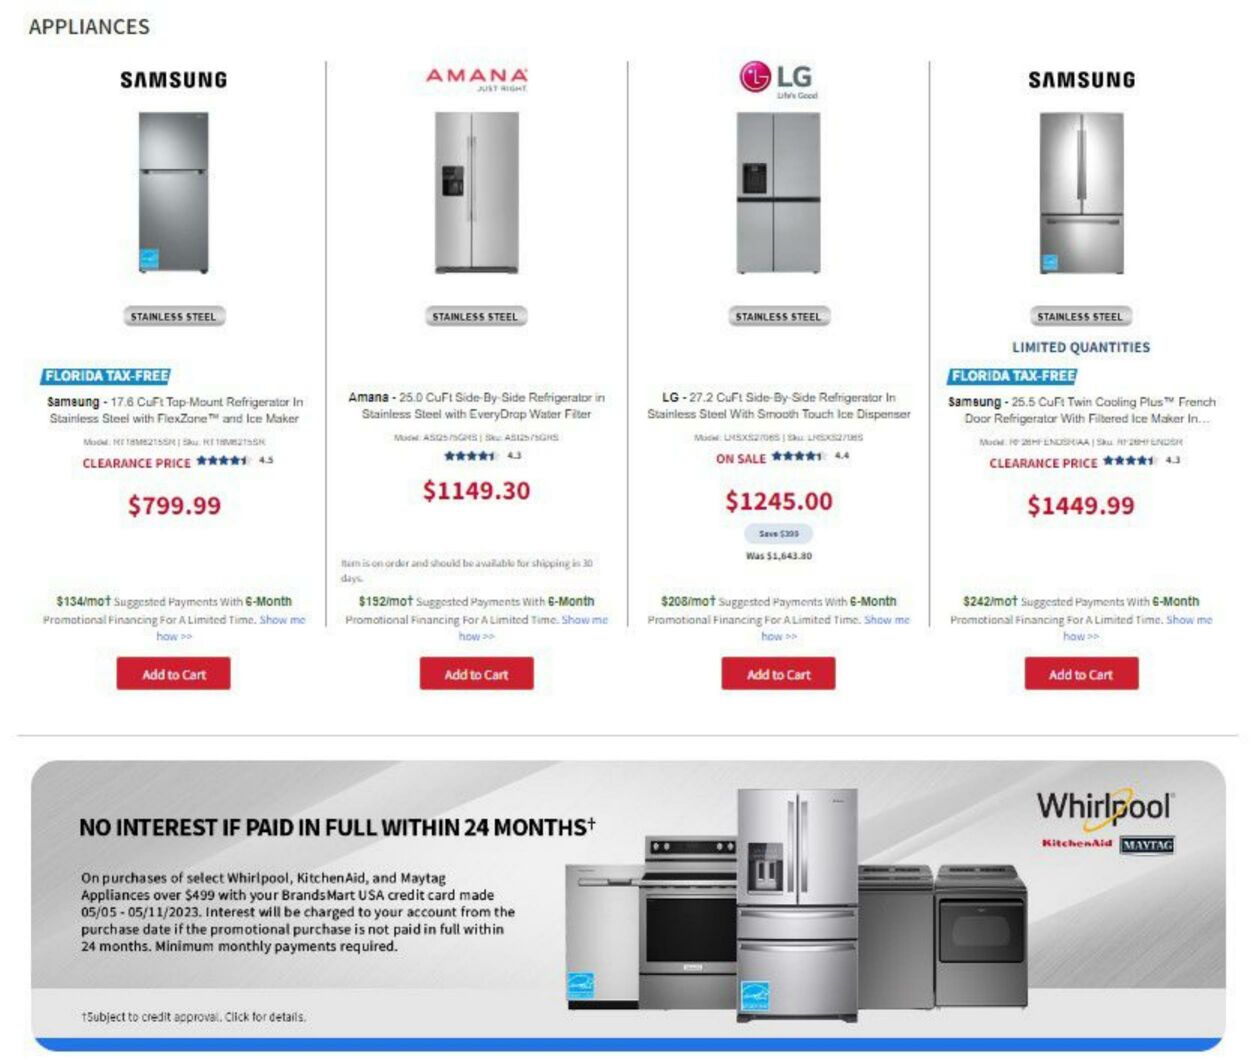 Weekly ad BrandsMart USA 05/01/2023 - 05/31/2023